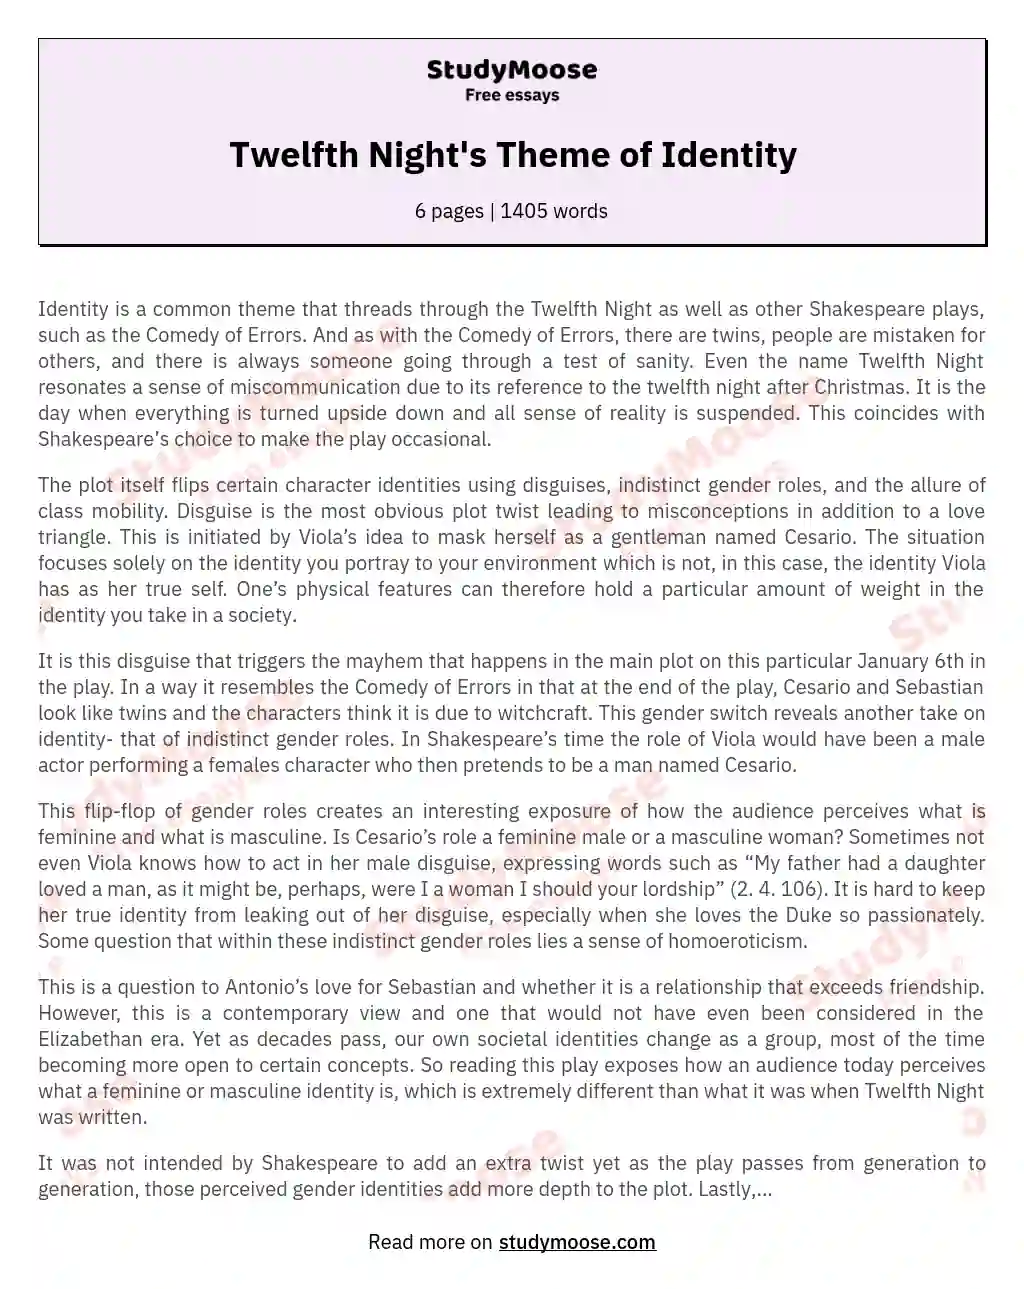 Twelfth Night's Theme of Identity essay